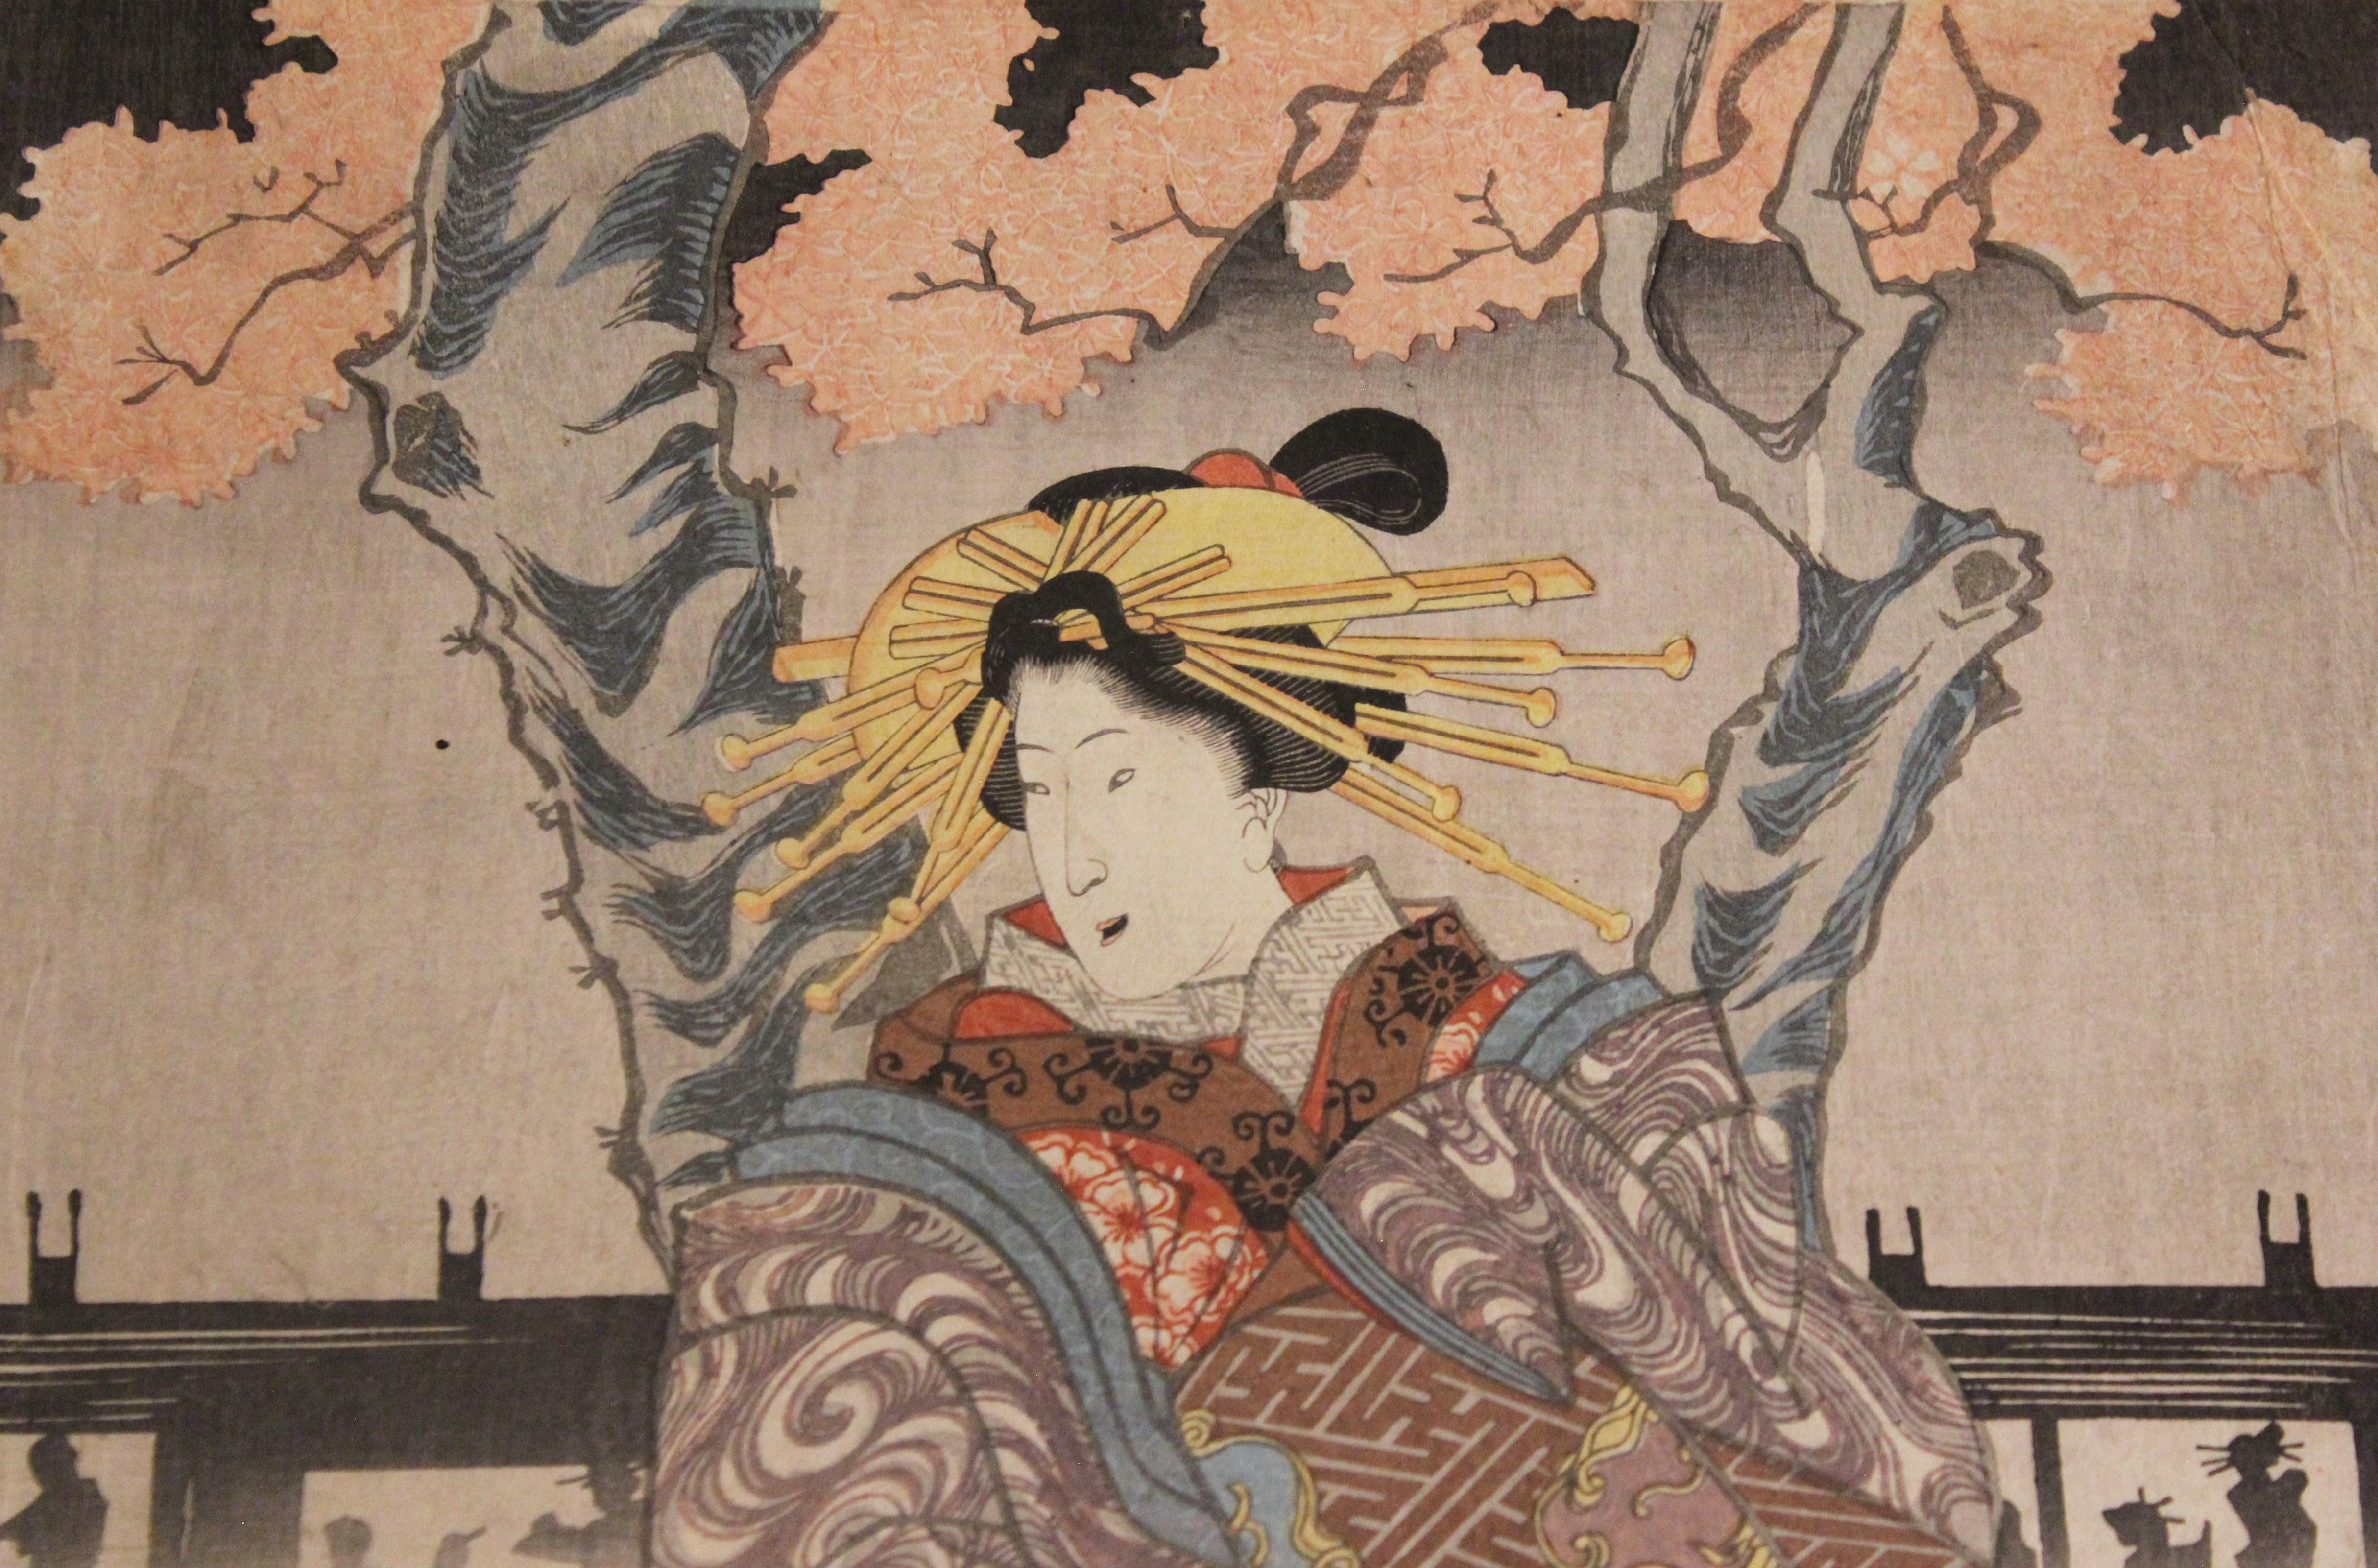 japanese geisha woodblock prints